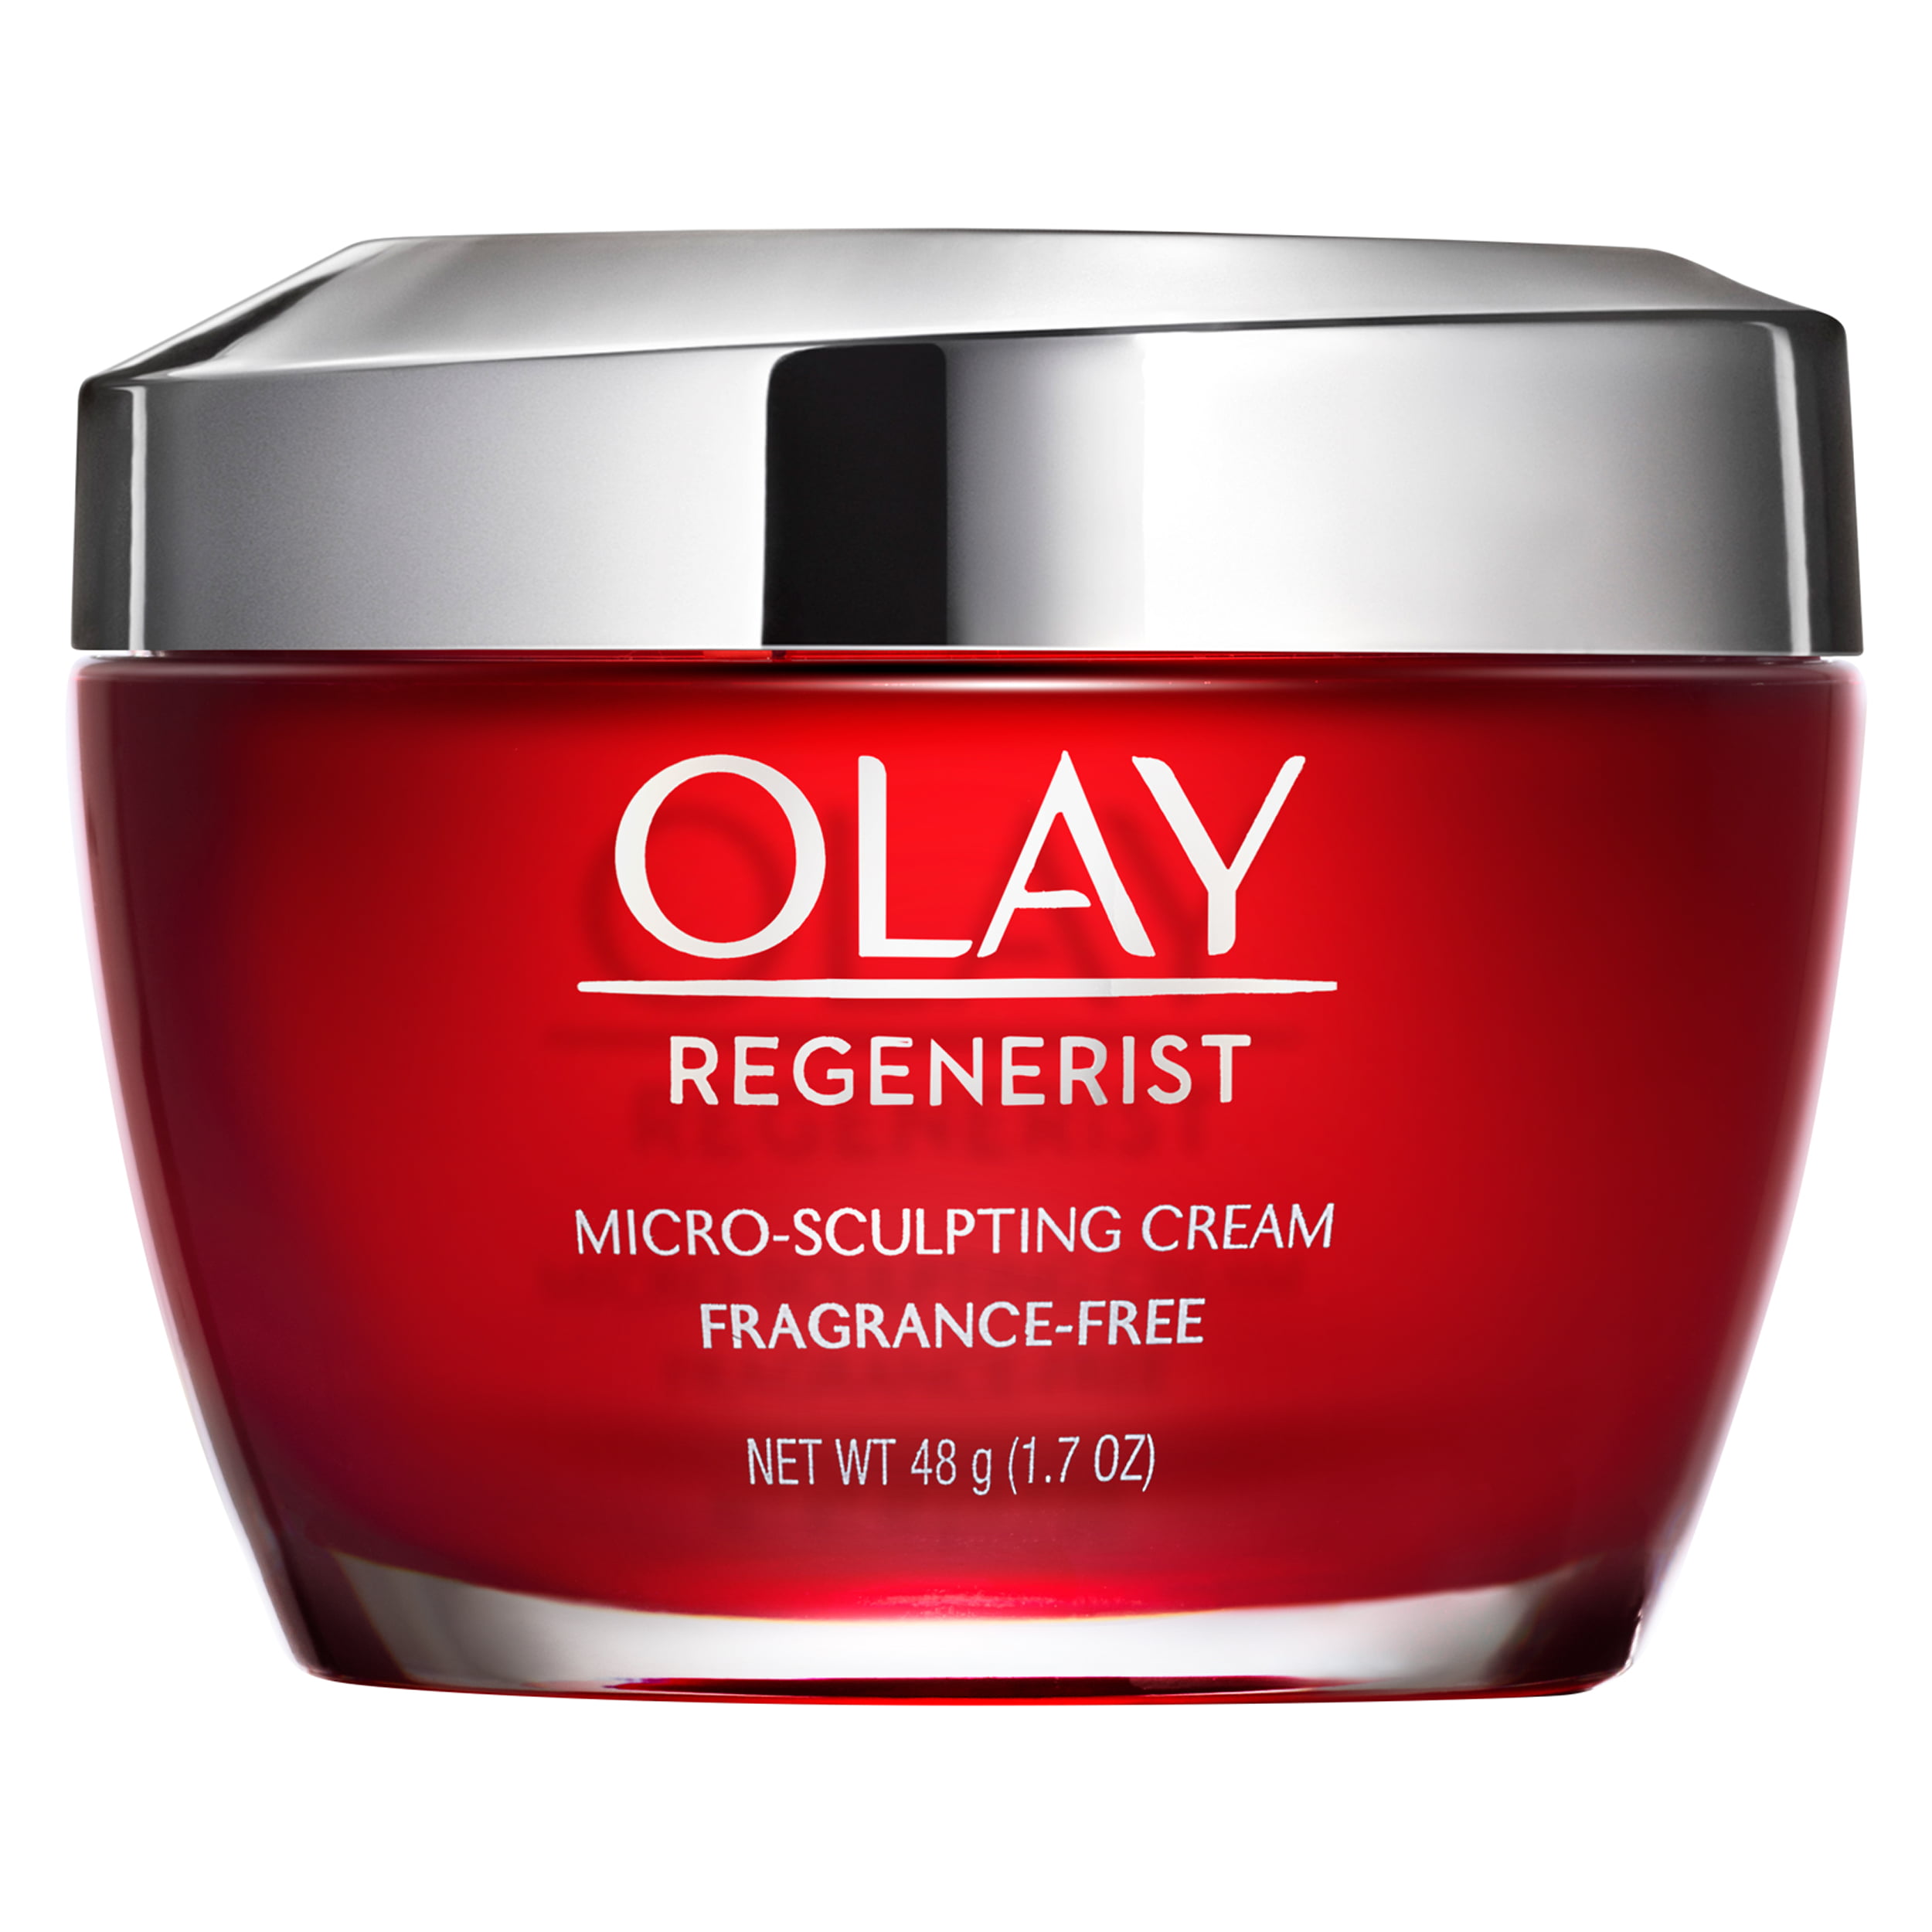 Olay Regenerist Micro-Sculpting Cream Face Moisturizer, Fragrance-Free, 1.7 Oz - Walmart.com 